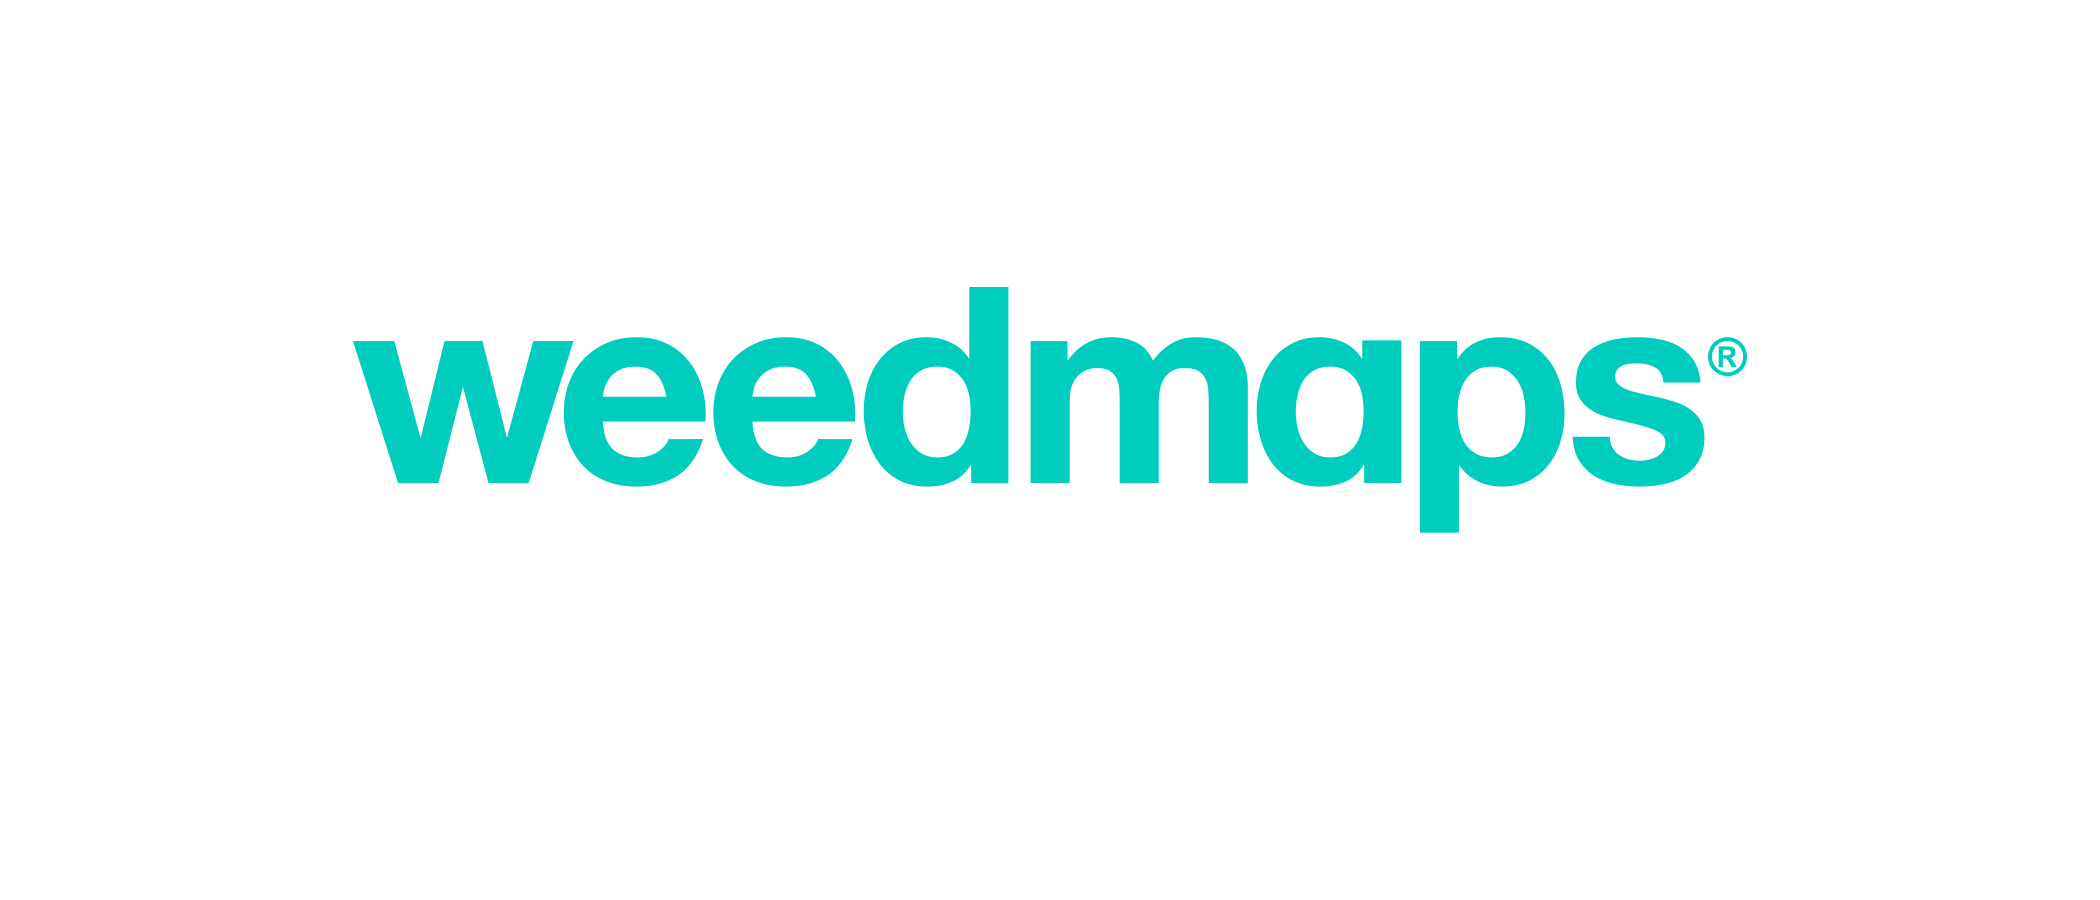 Weedmaps